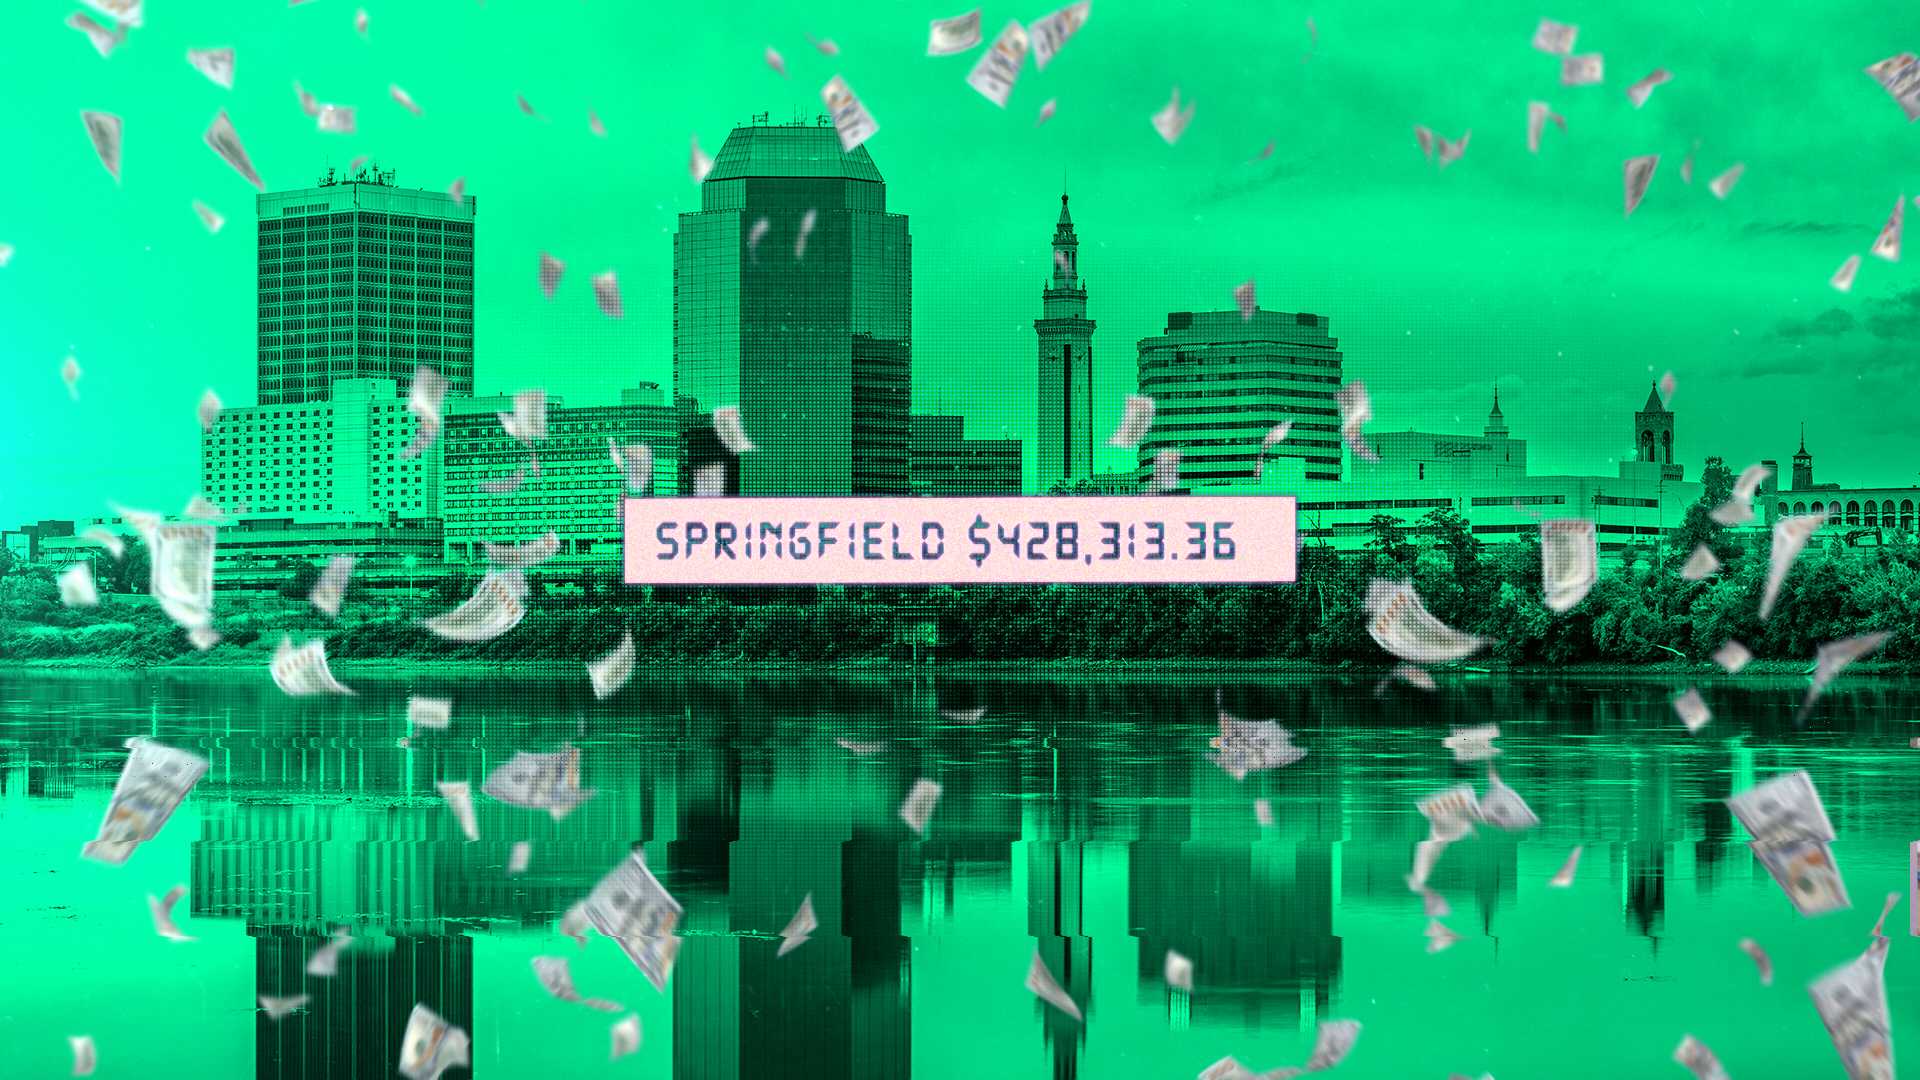 Springfield debt